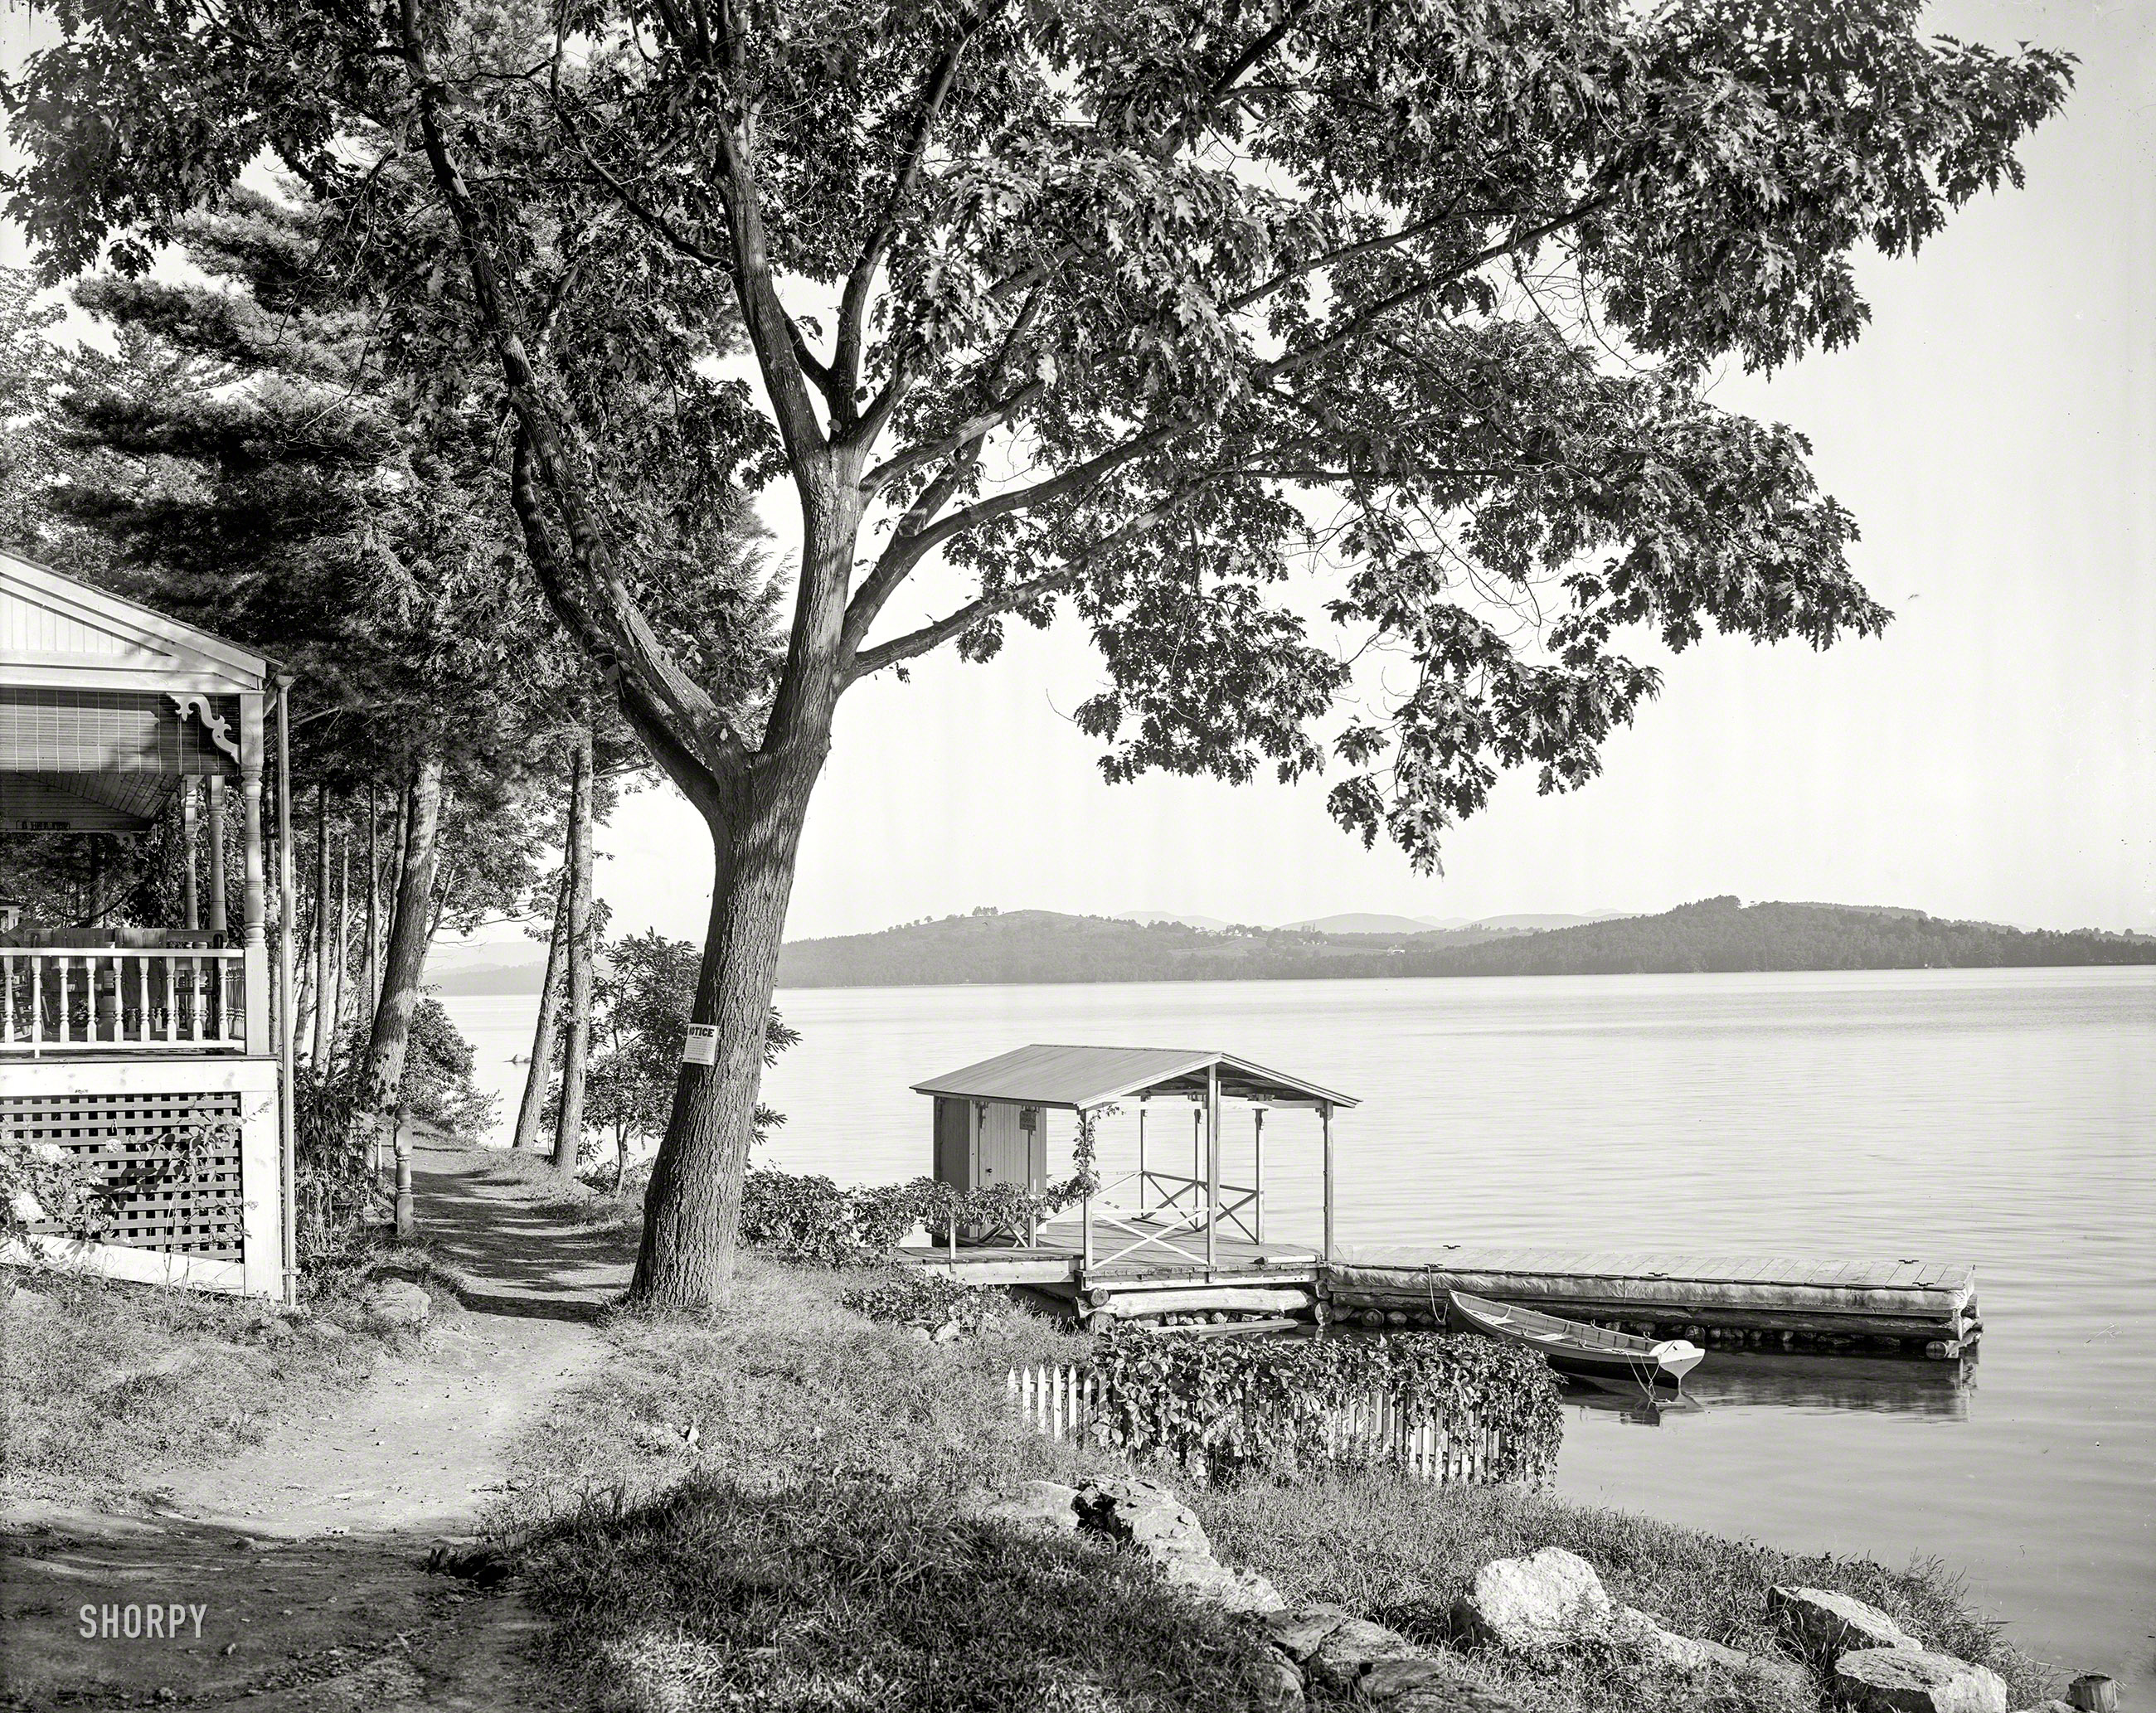 New Hampshire circa 1906. "Shore path at Weirs, Lake Winnipesaukee." 8x10 inch dry plate glass negative, Detroit Publishing Company. View full size.